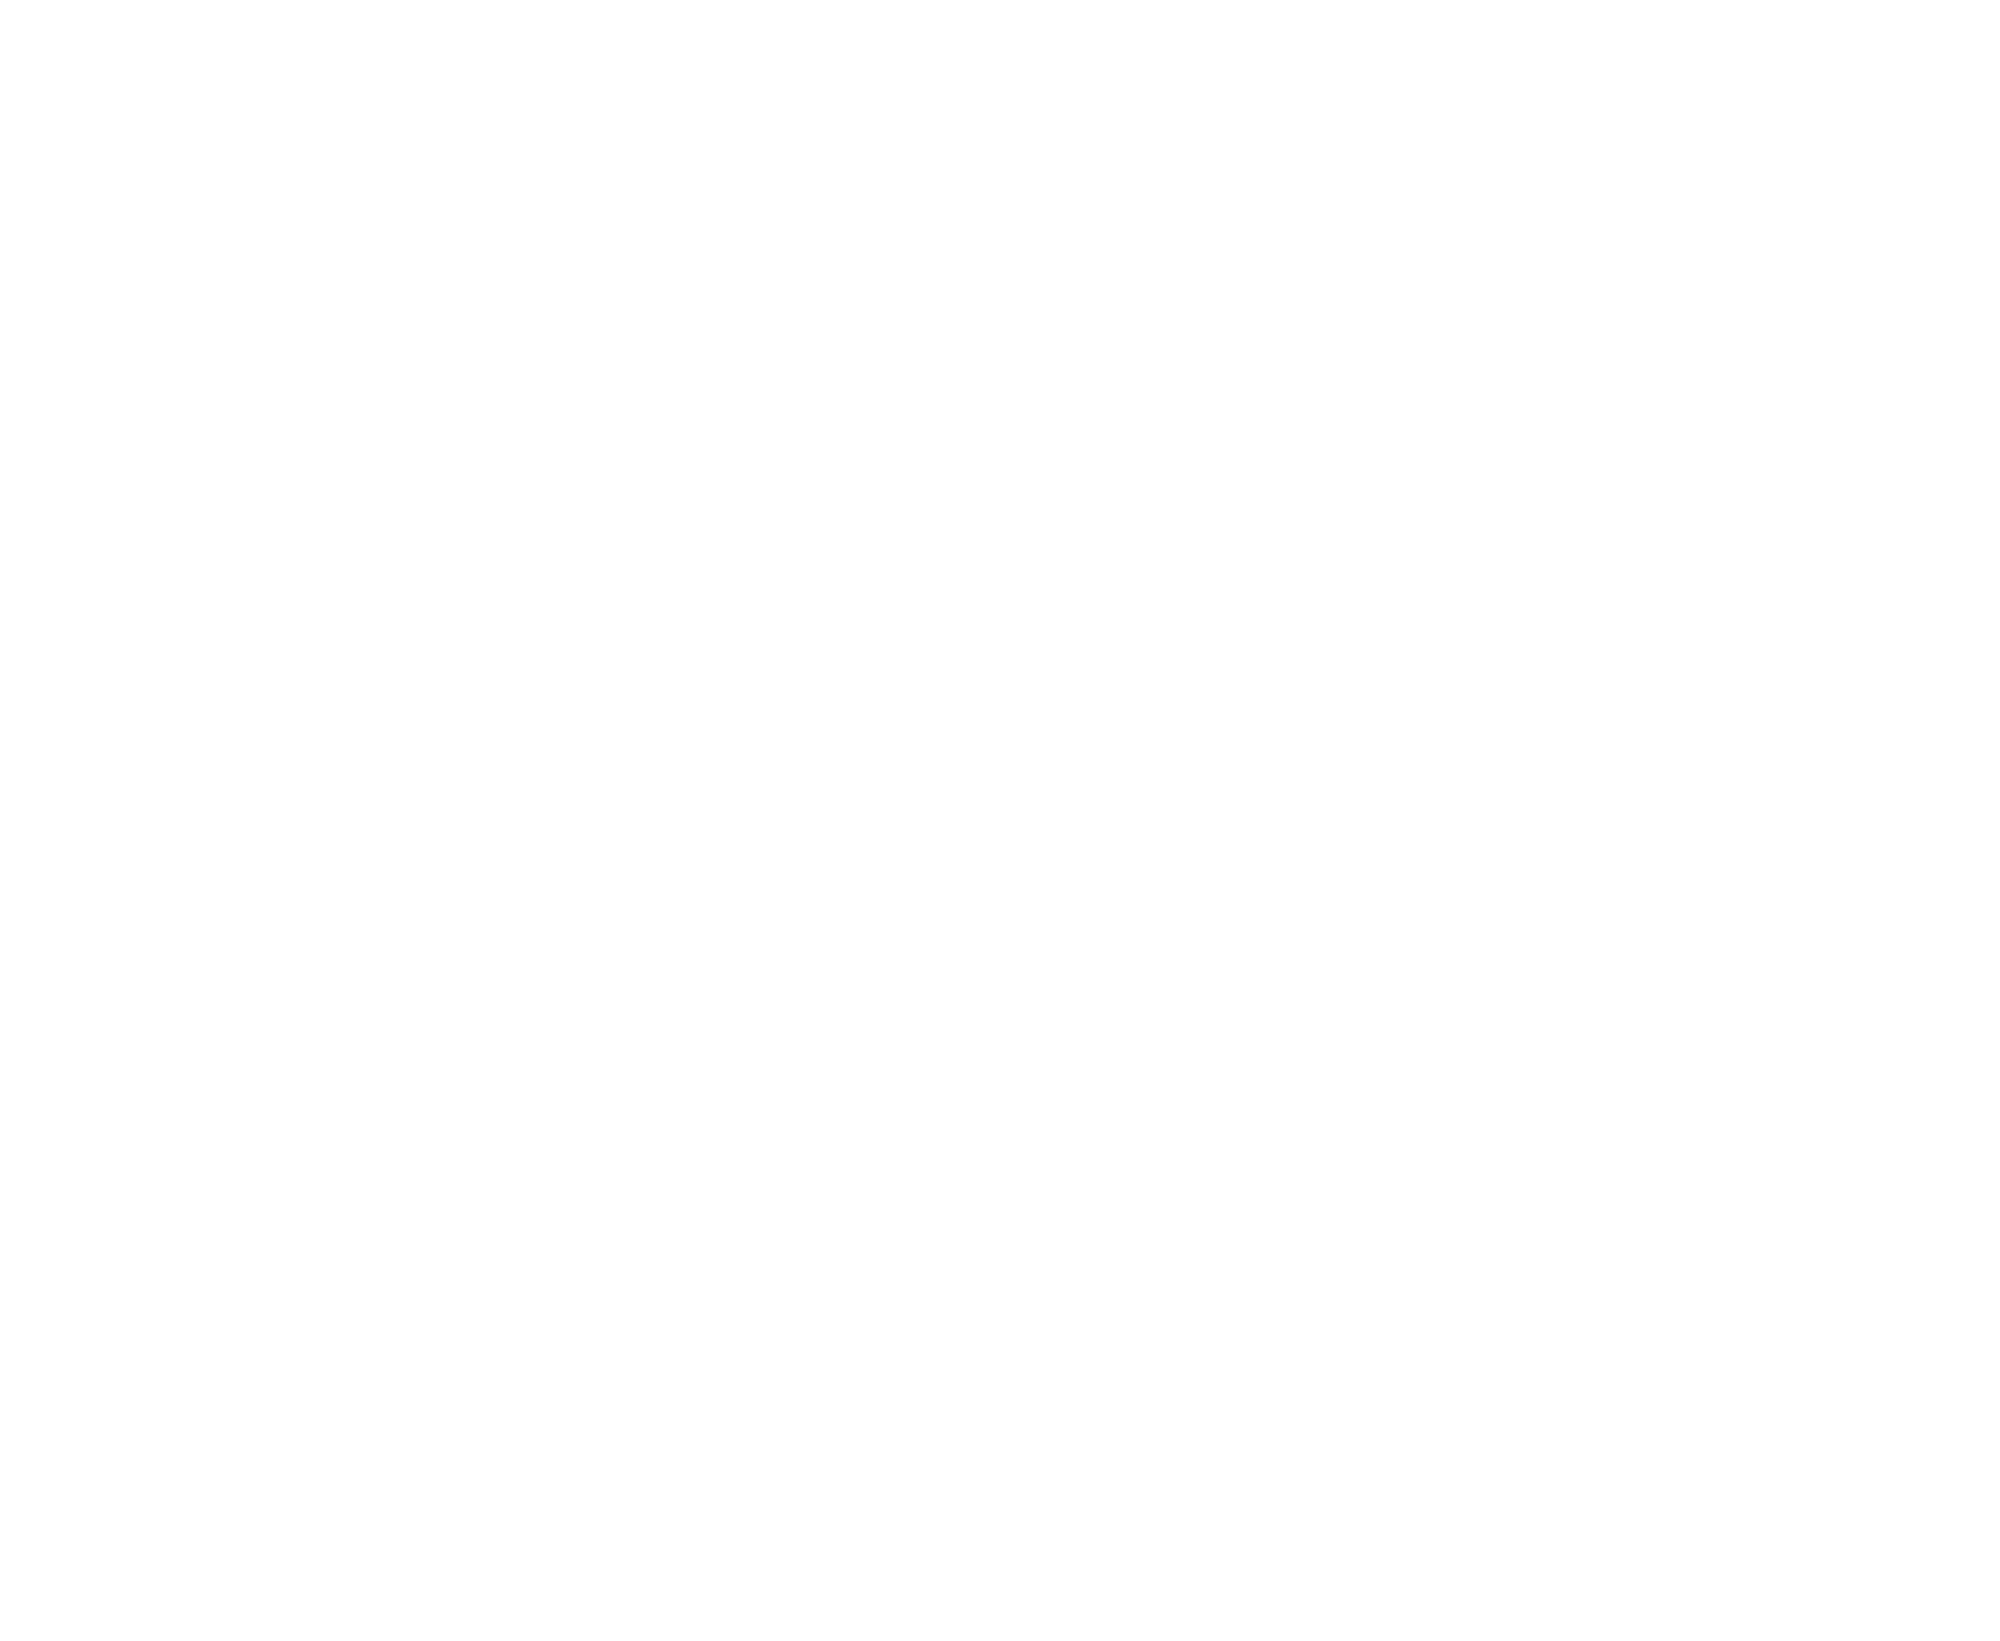 M&G Group logo